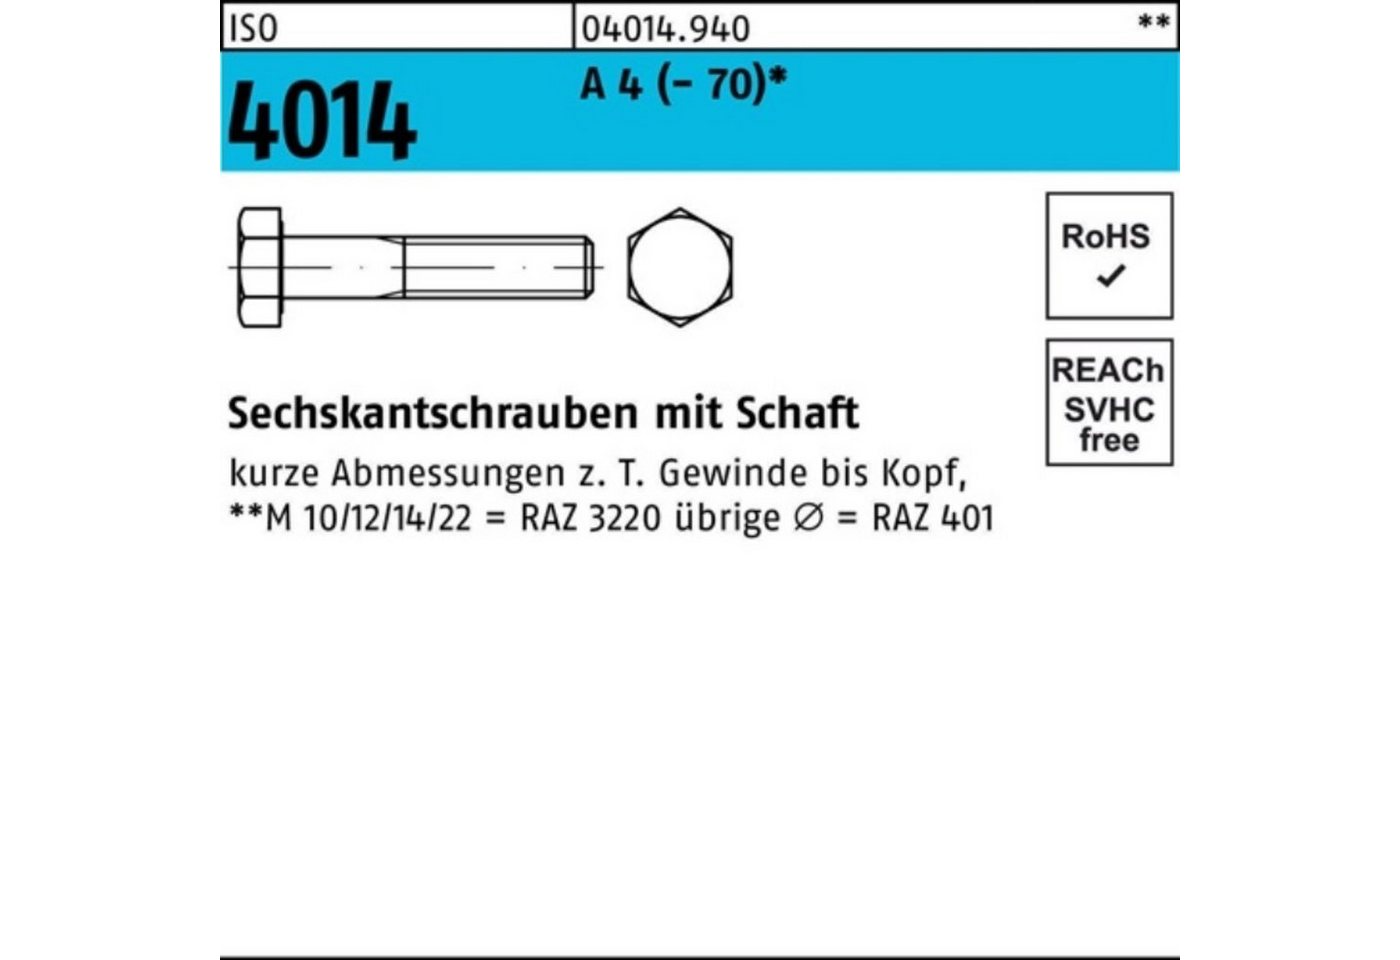 Bufab Sechskantschraube 100er Pack Sechskantschraube ISO 4014 Schaft M22x 200 A 4 (70) 10 St von Bufab